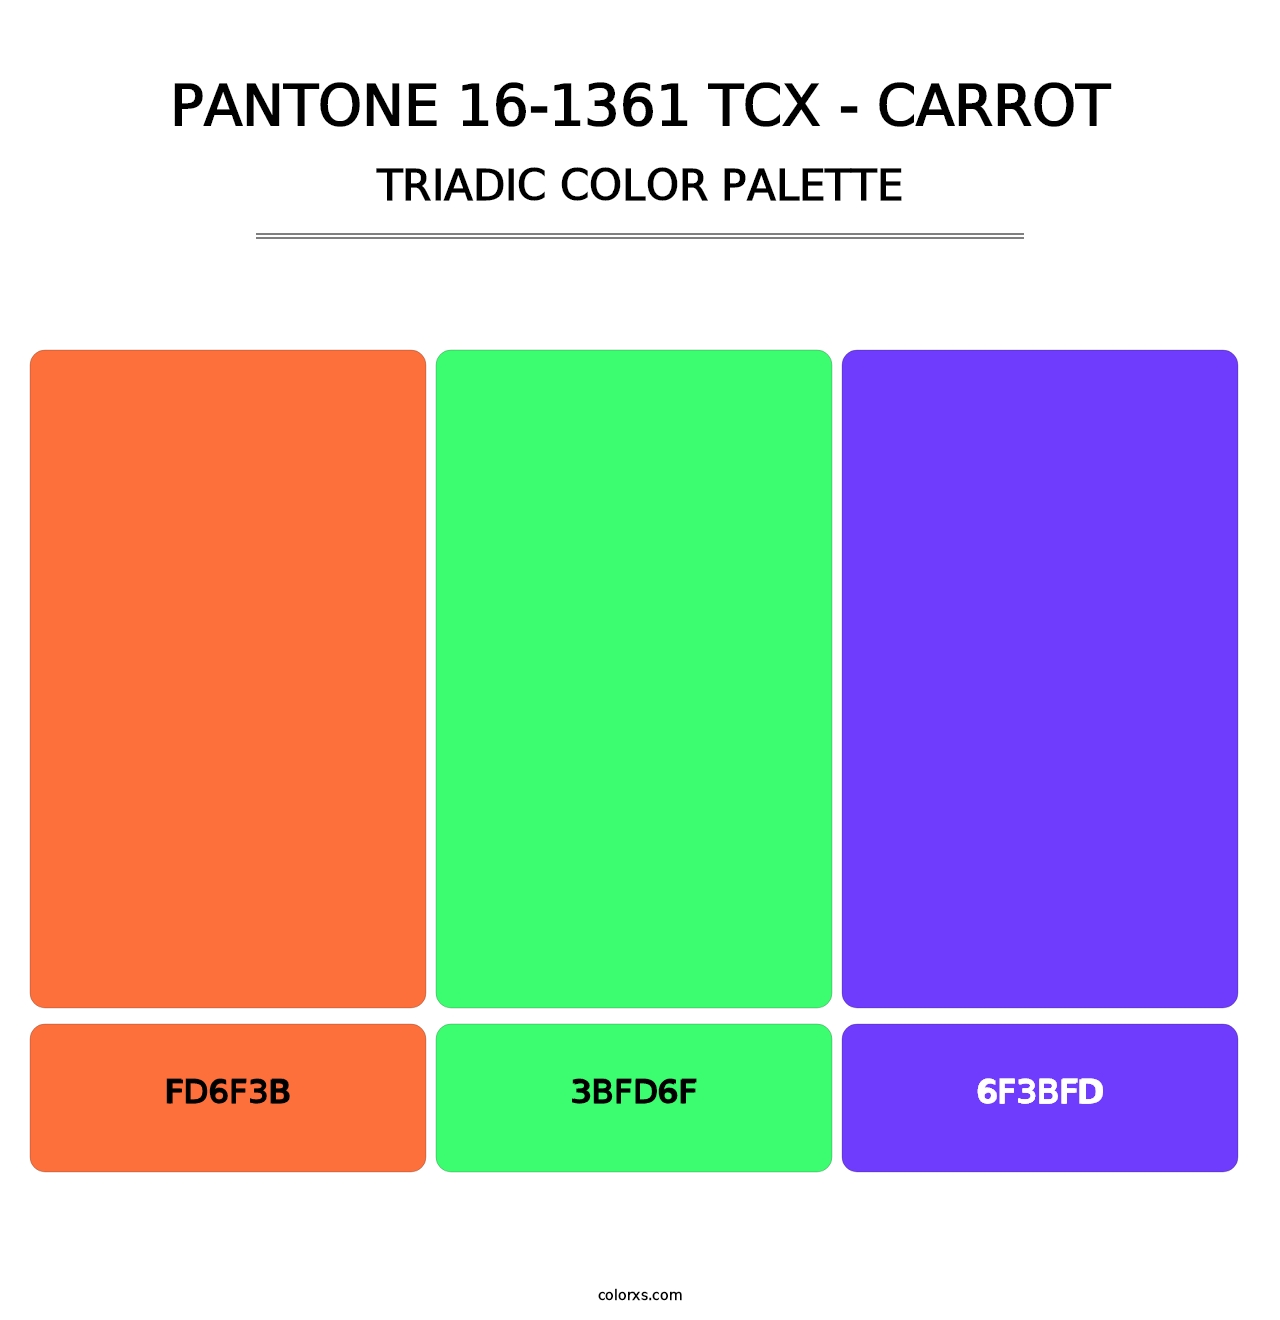 PANTONE 16-1361 TCX - Carrot - Triadic Color Palette